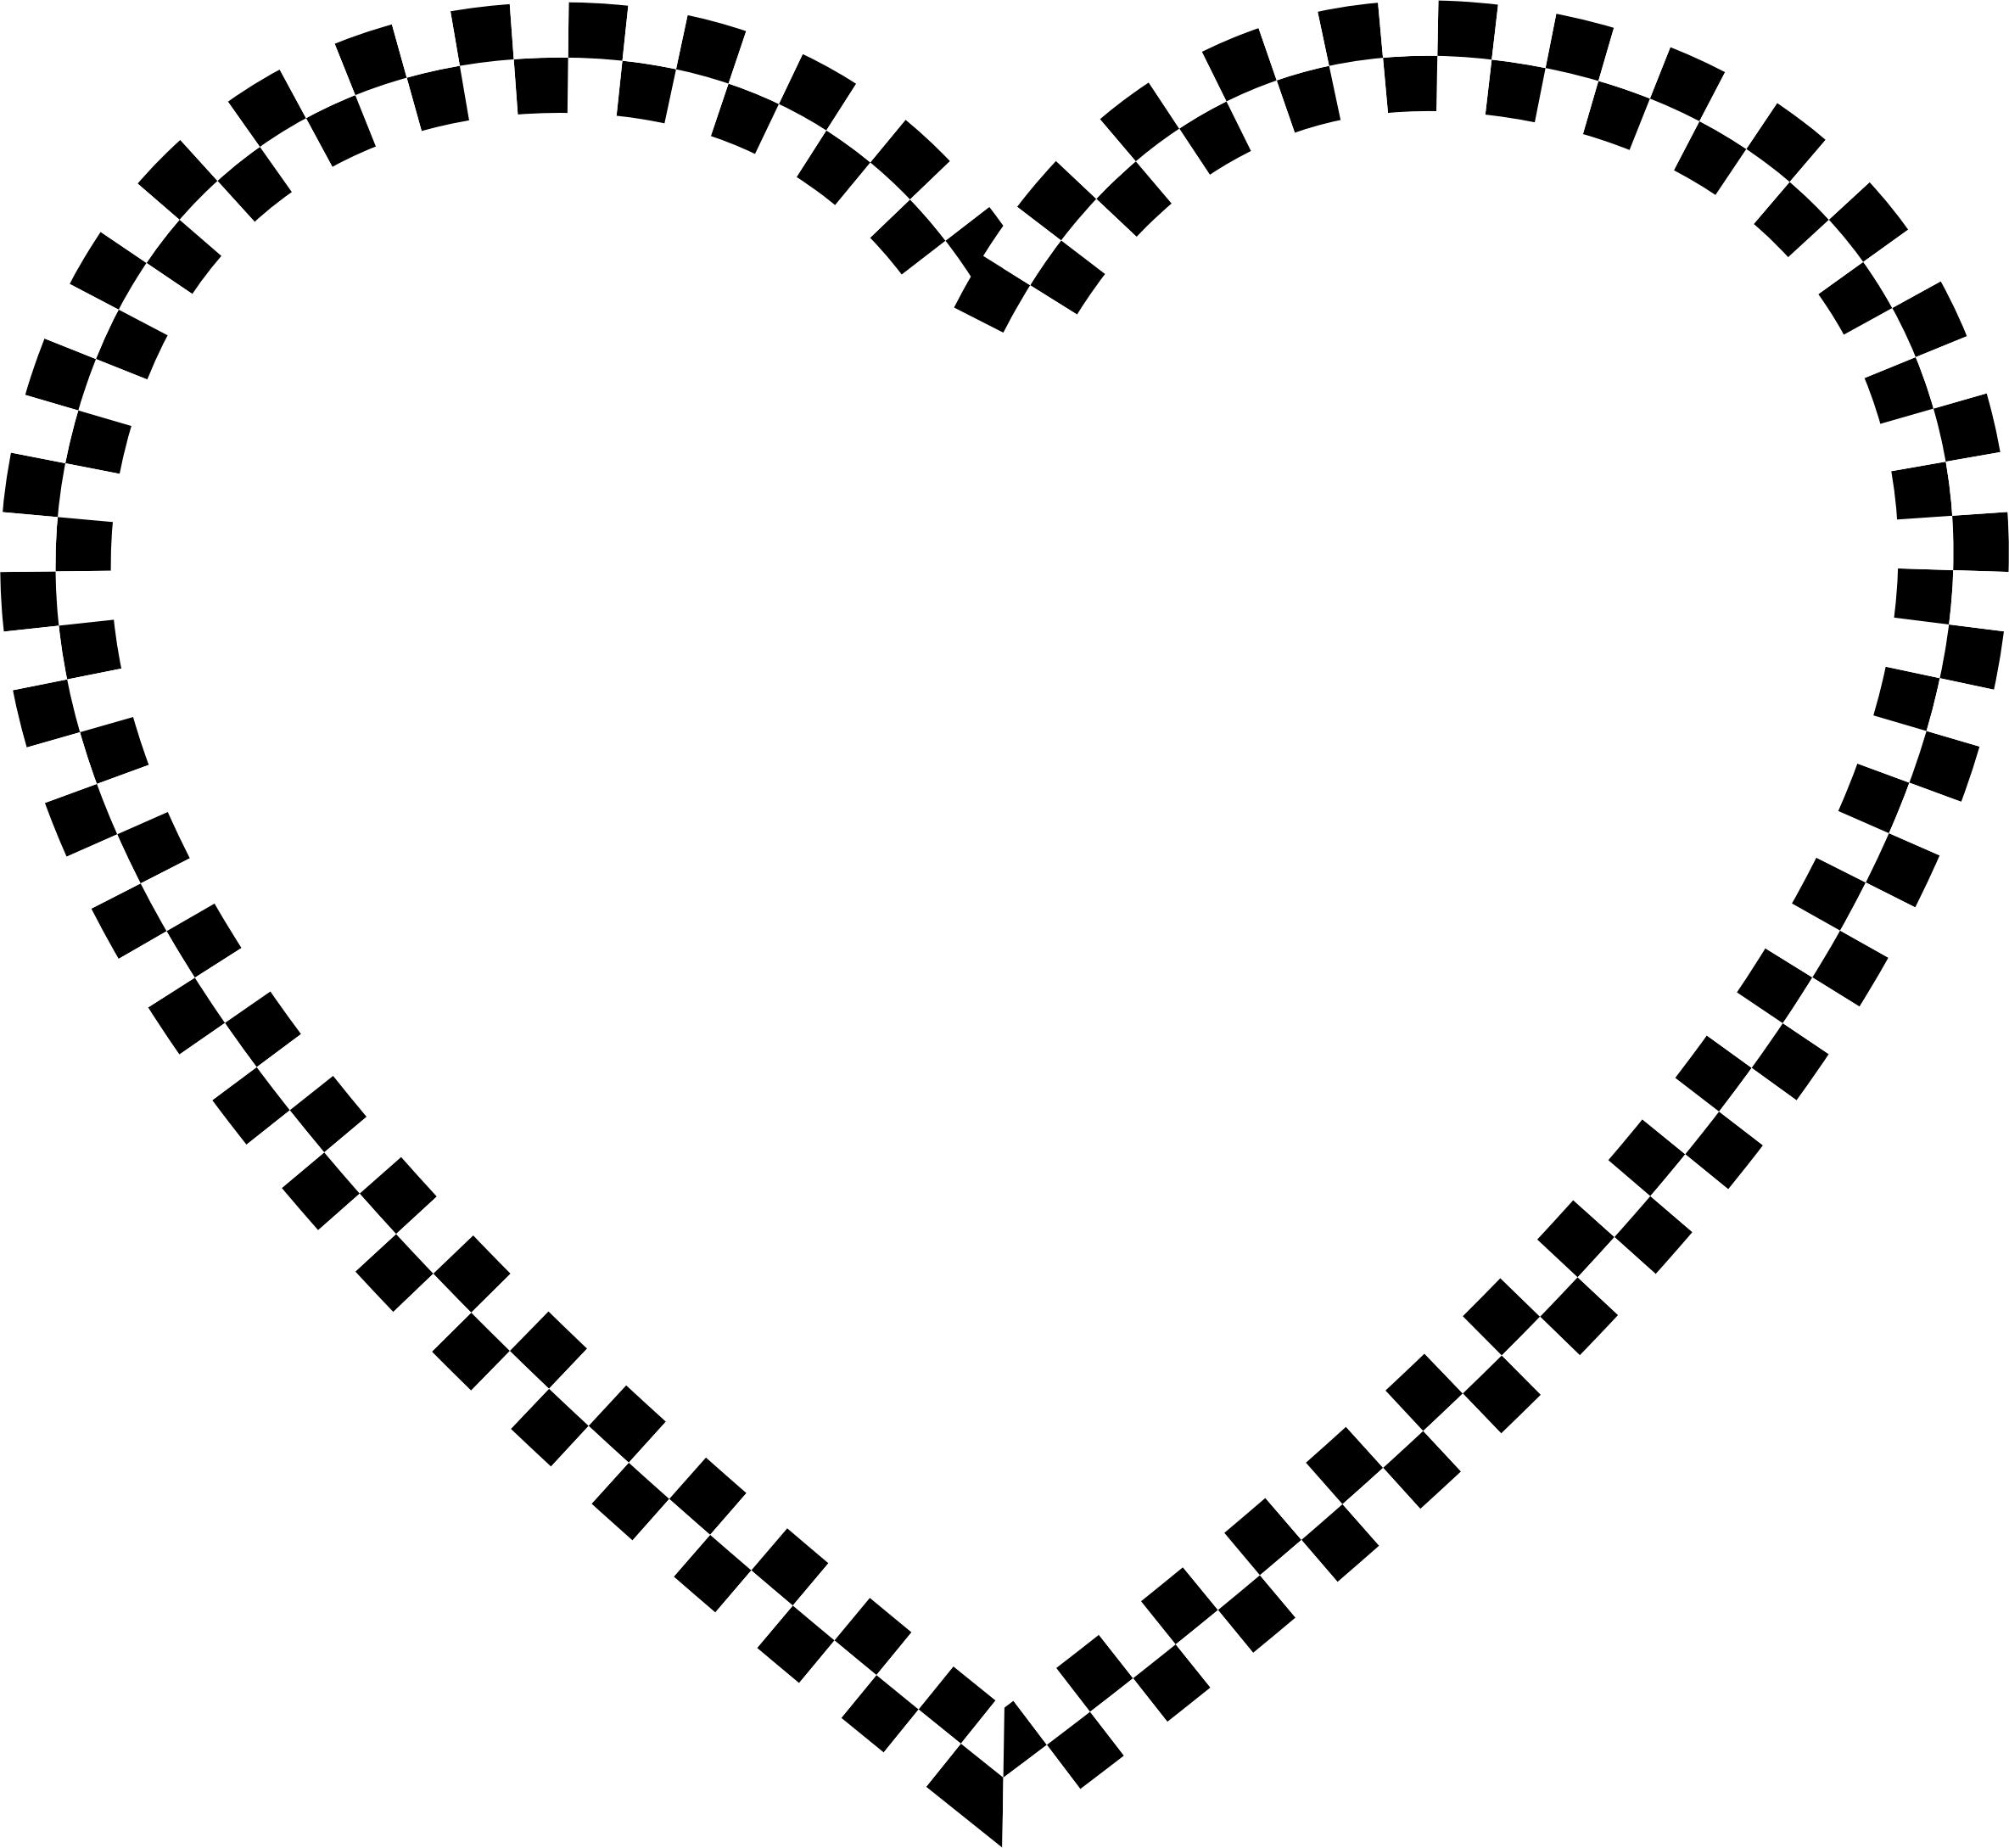 Checkered Heart - Black And White Checkered Heart (2368x2178)